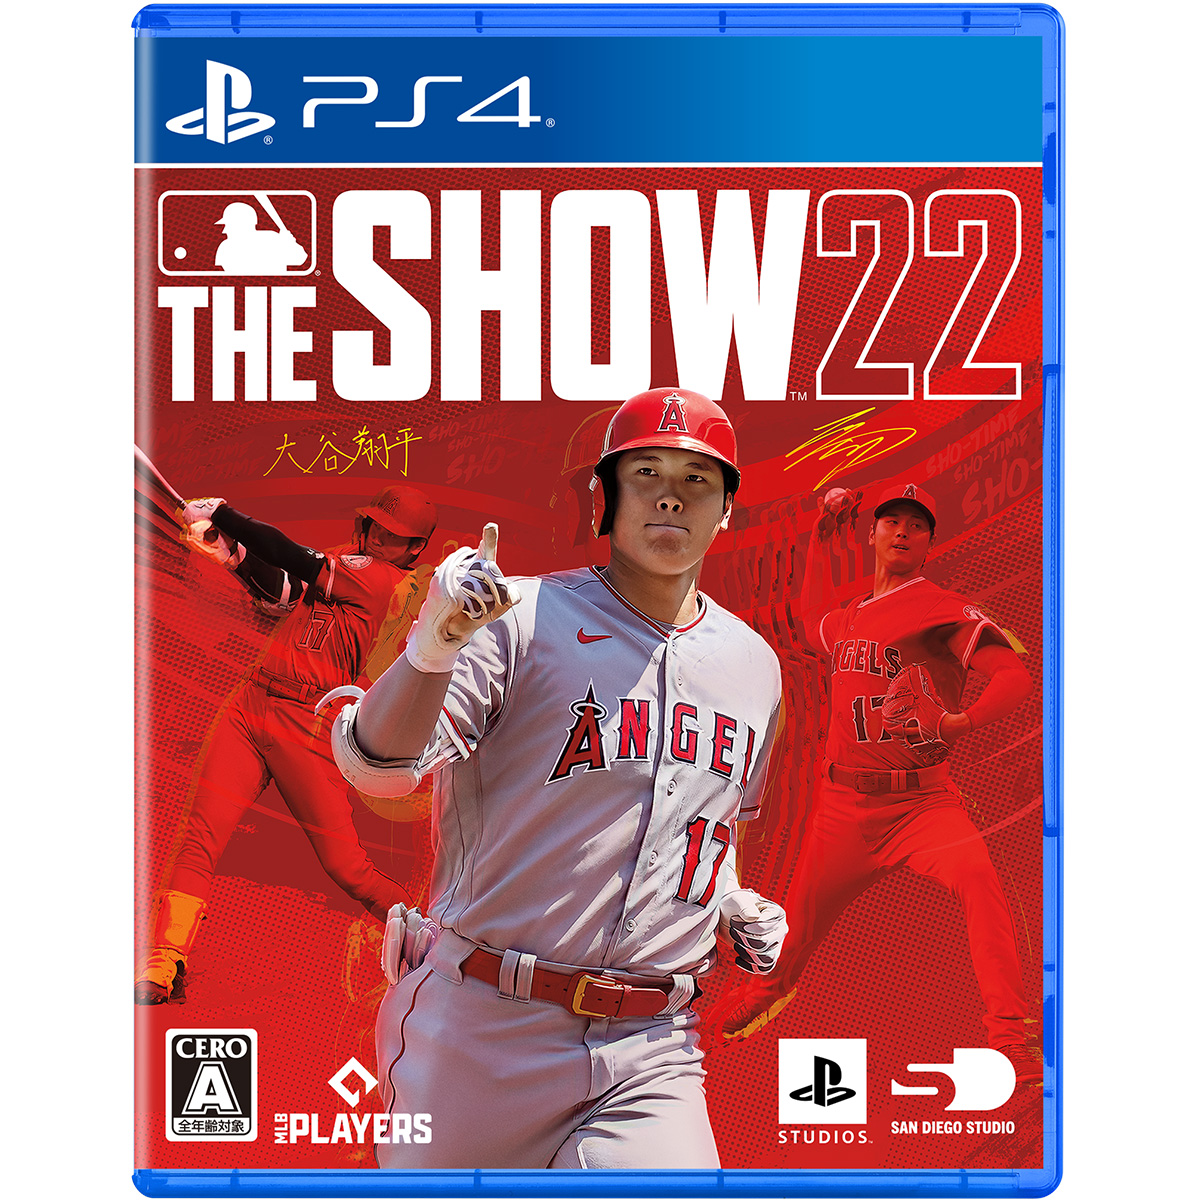 ［PS4］MLB The Show 22 英語版 メジャーリーグベースボール ザ ショウ